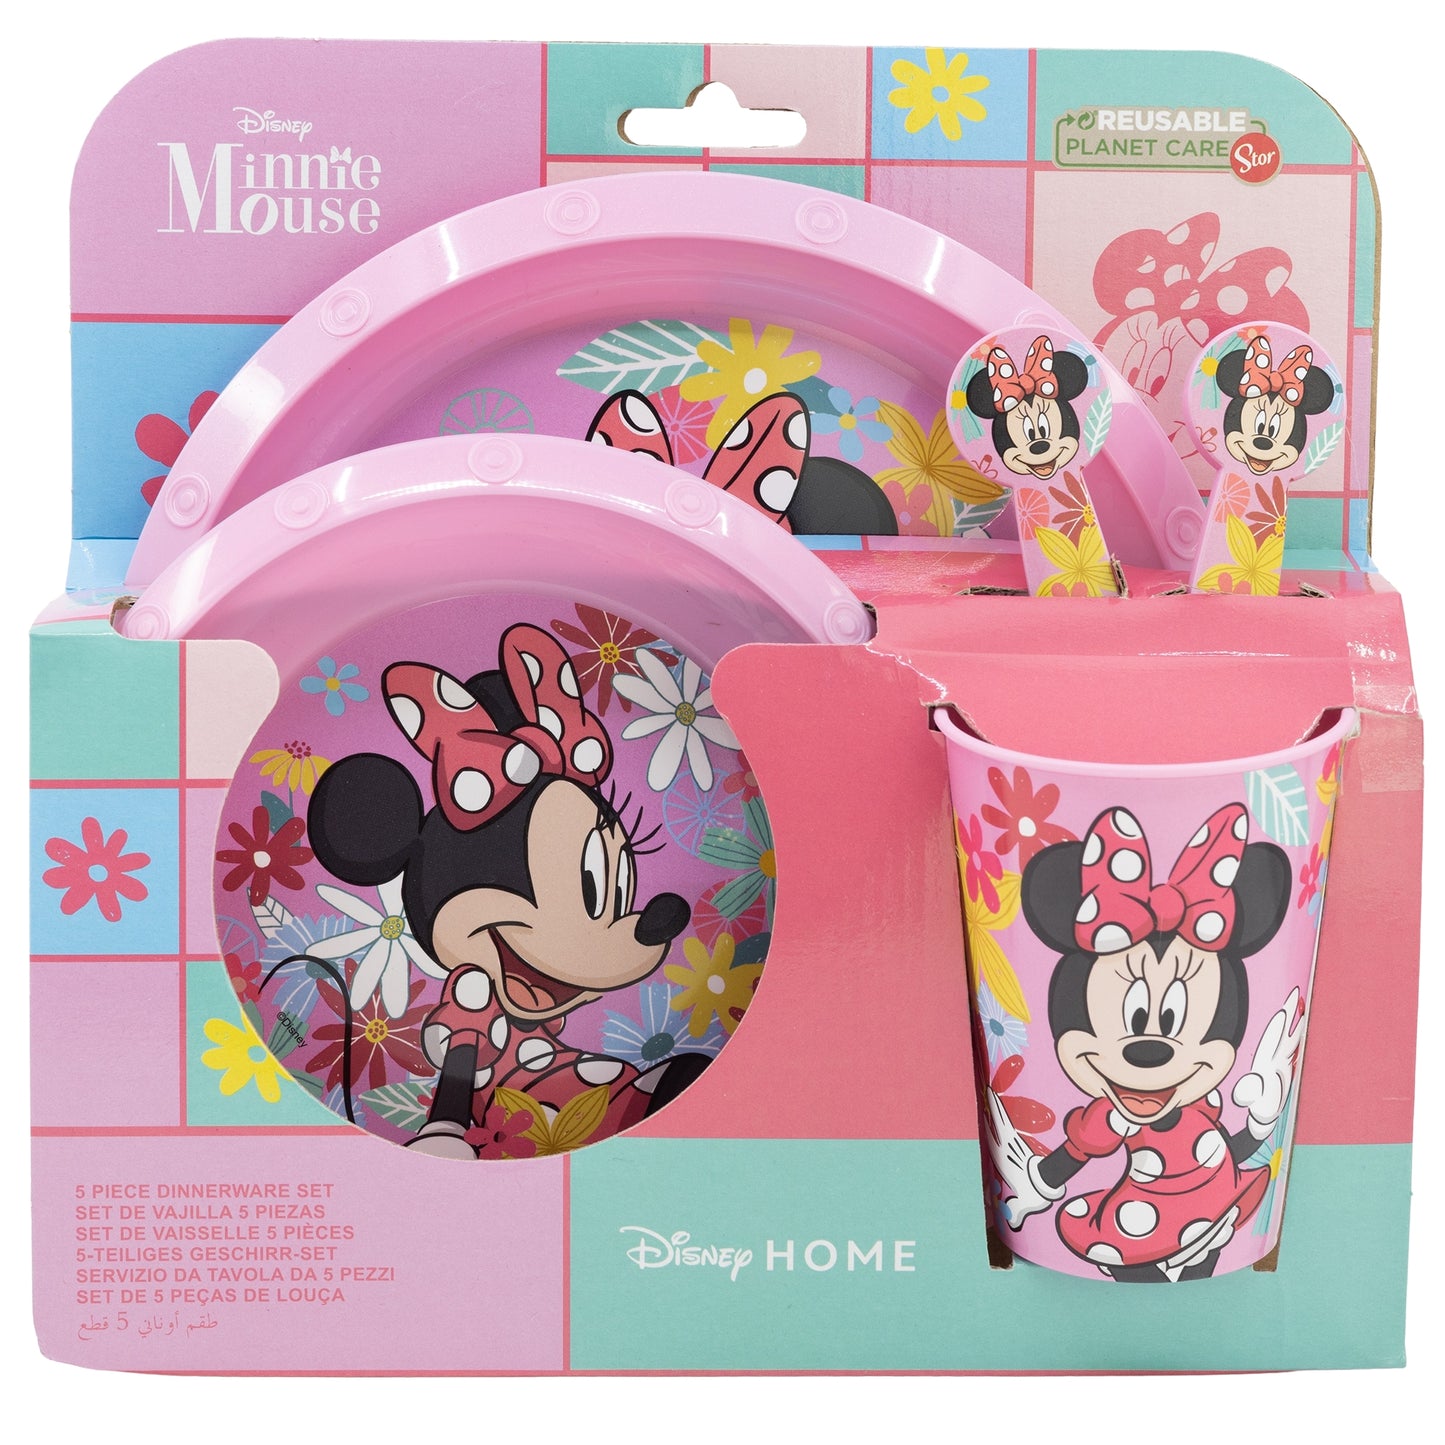 Disney Minnie Mouse Kinder Geschirr-Set 5 teilig Becher Teller Schüssel Besteck